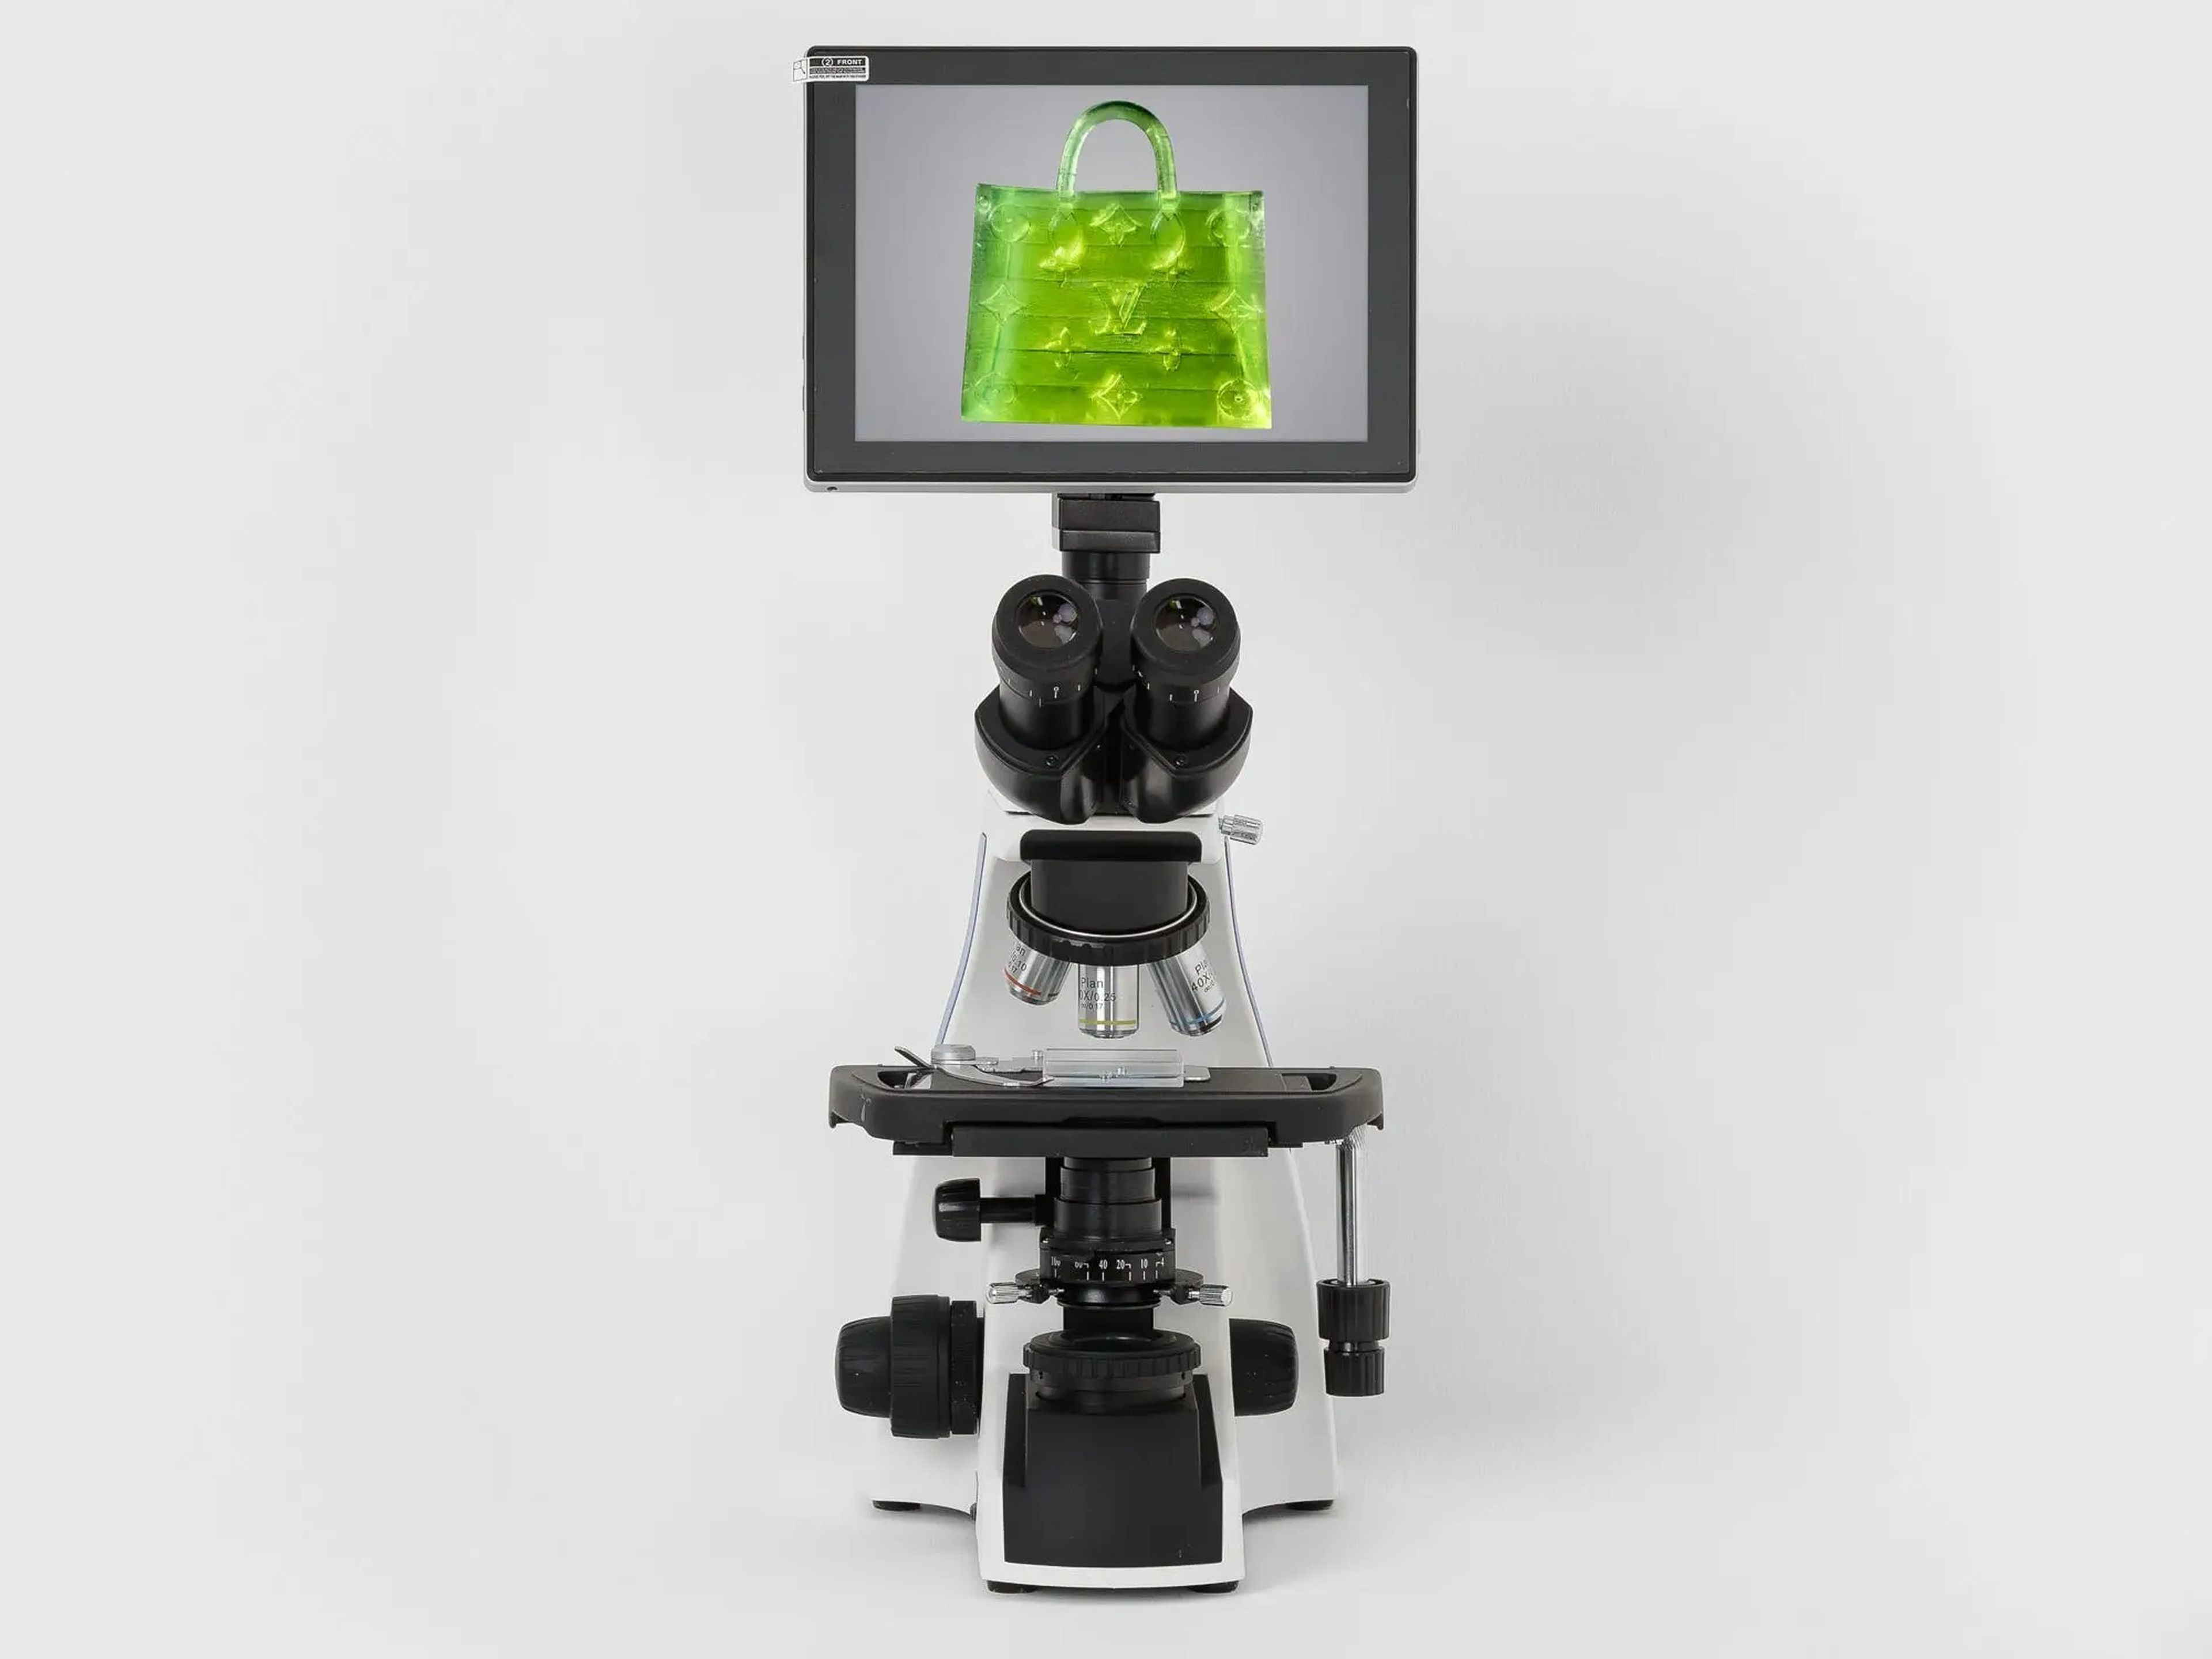 Microscopio con pantalla para ver el bolso.